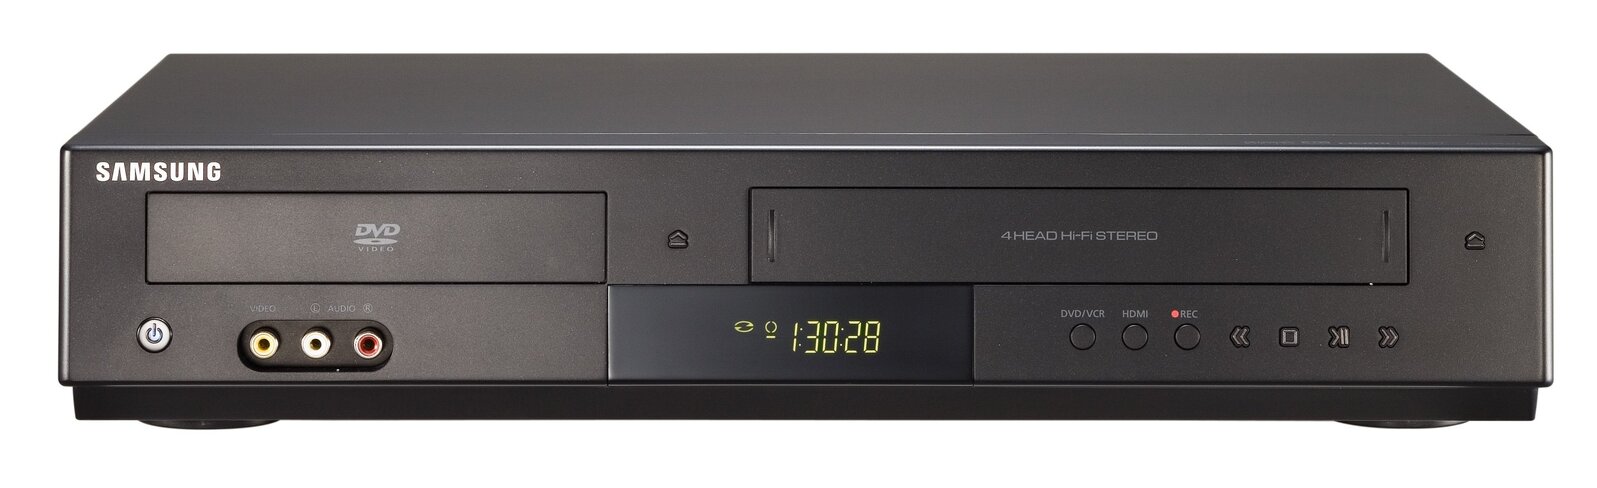 Samsung DVD-V6800 Multi-System DVD Player/VCR Recorder Combo - No Remote